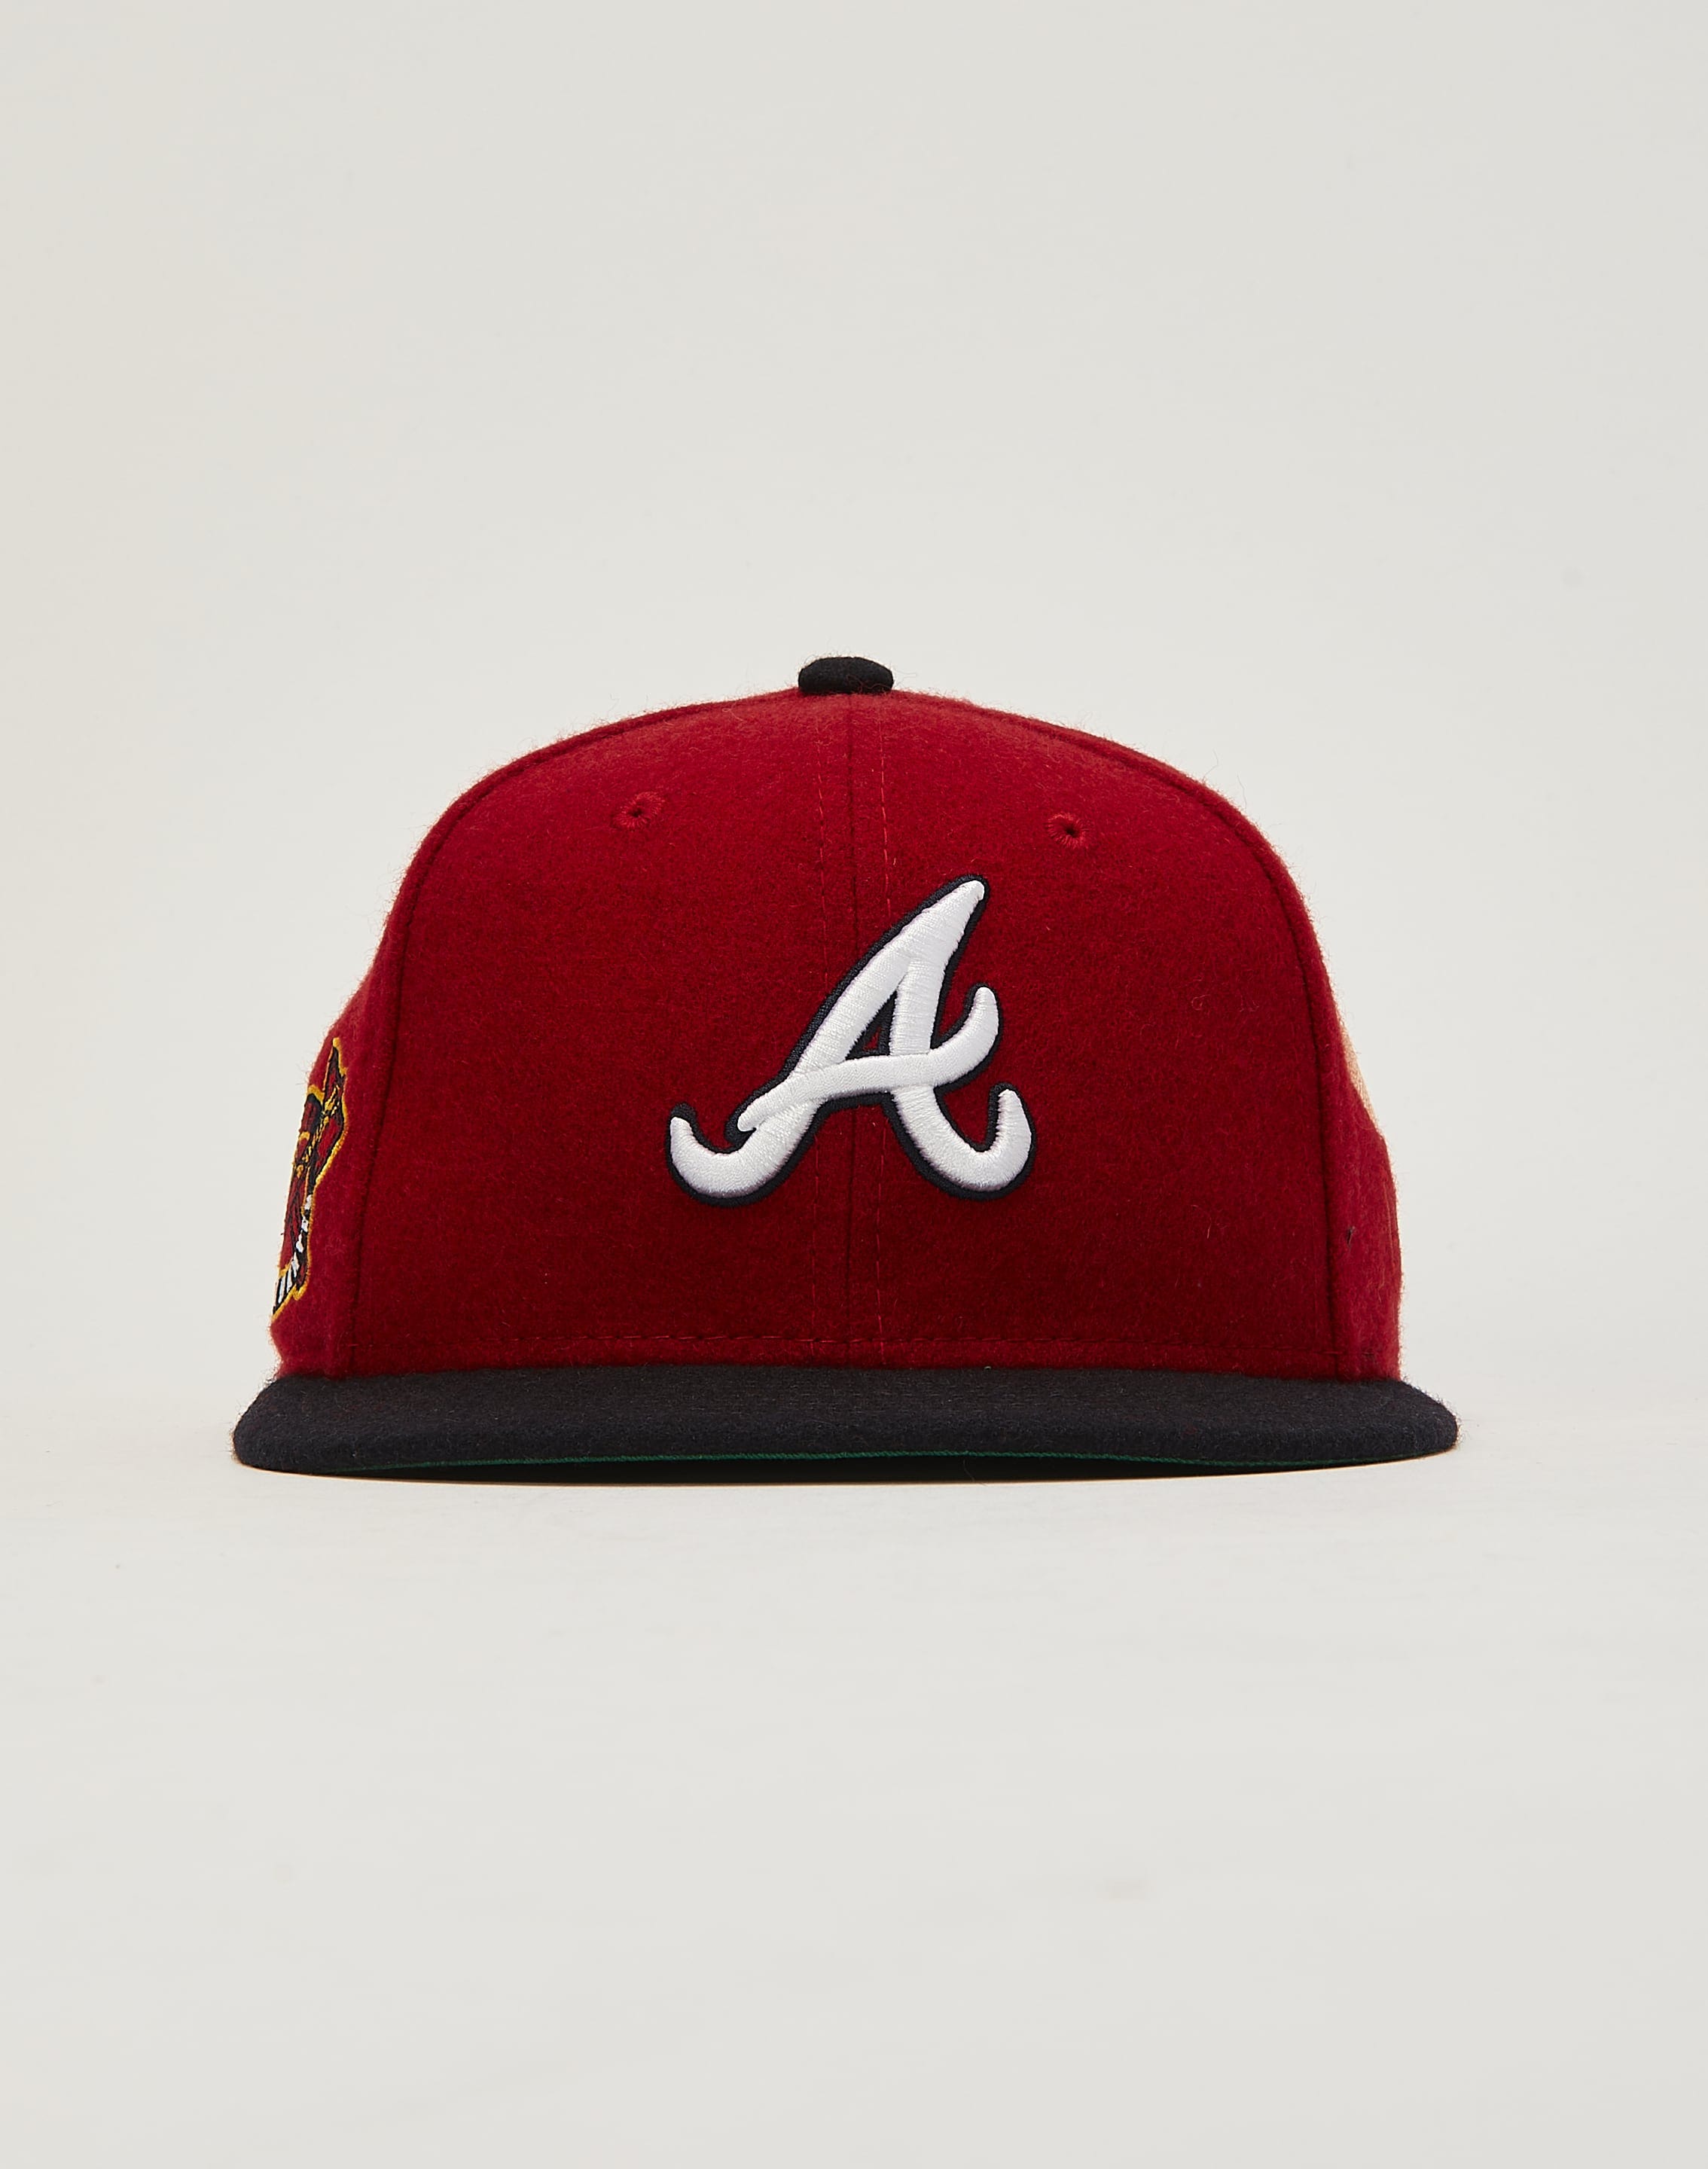 atlanta baseball hat